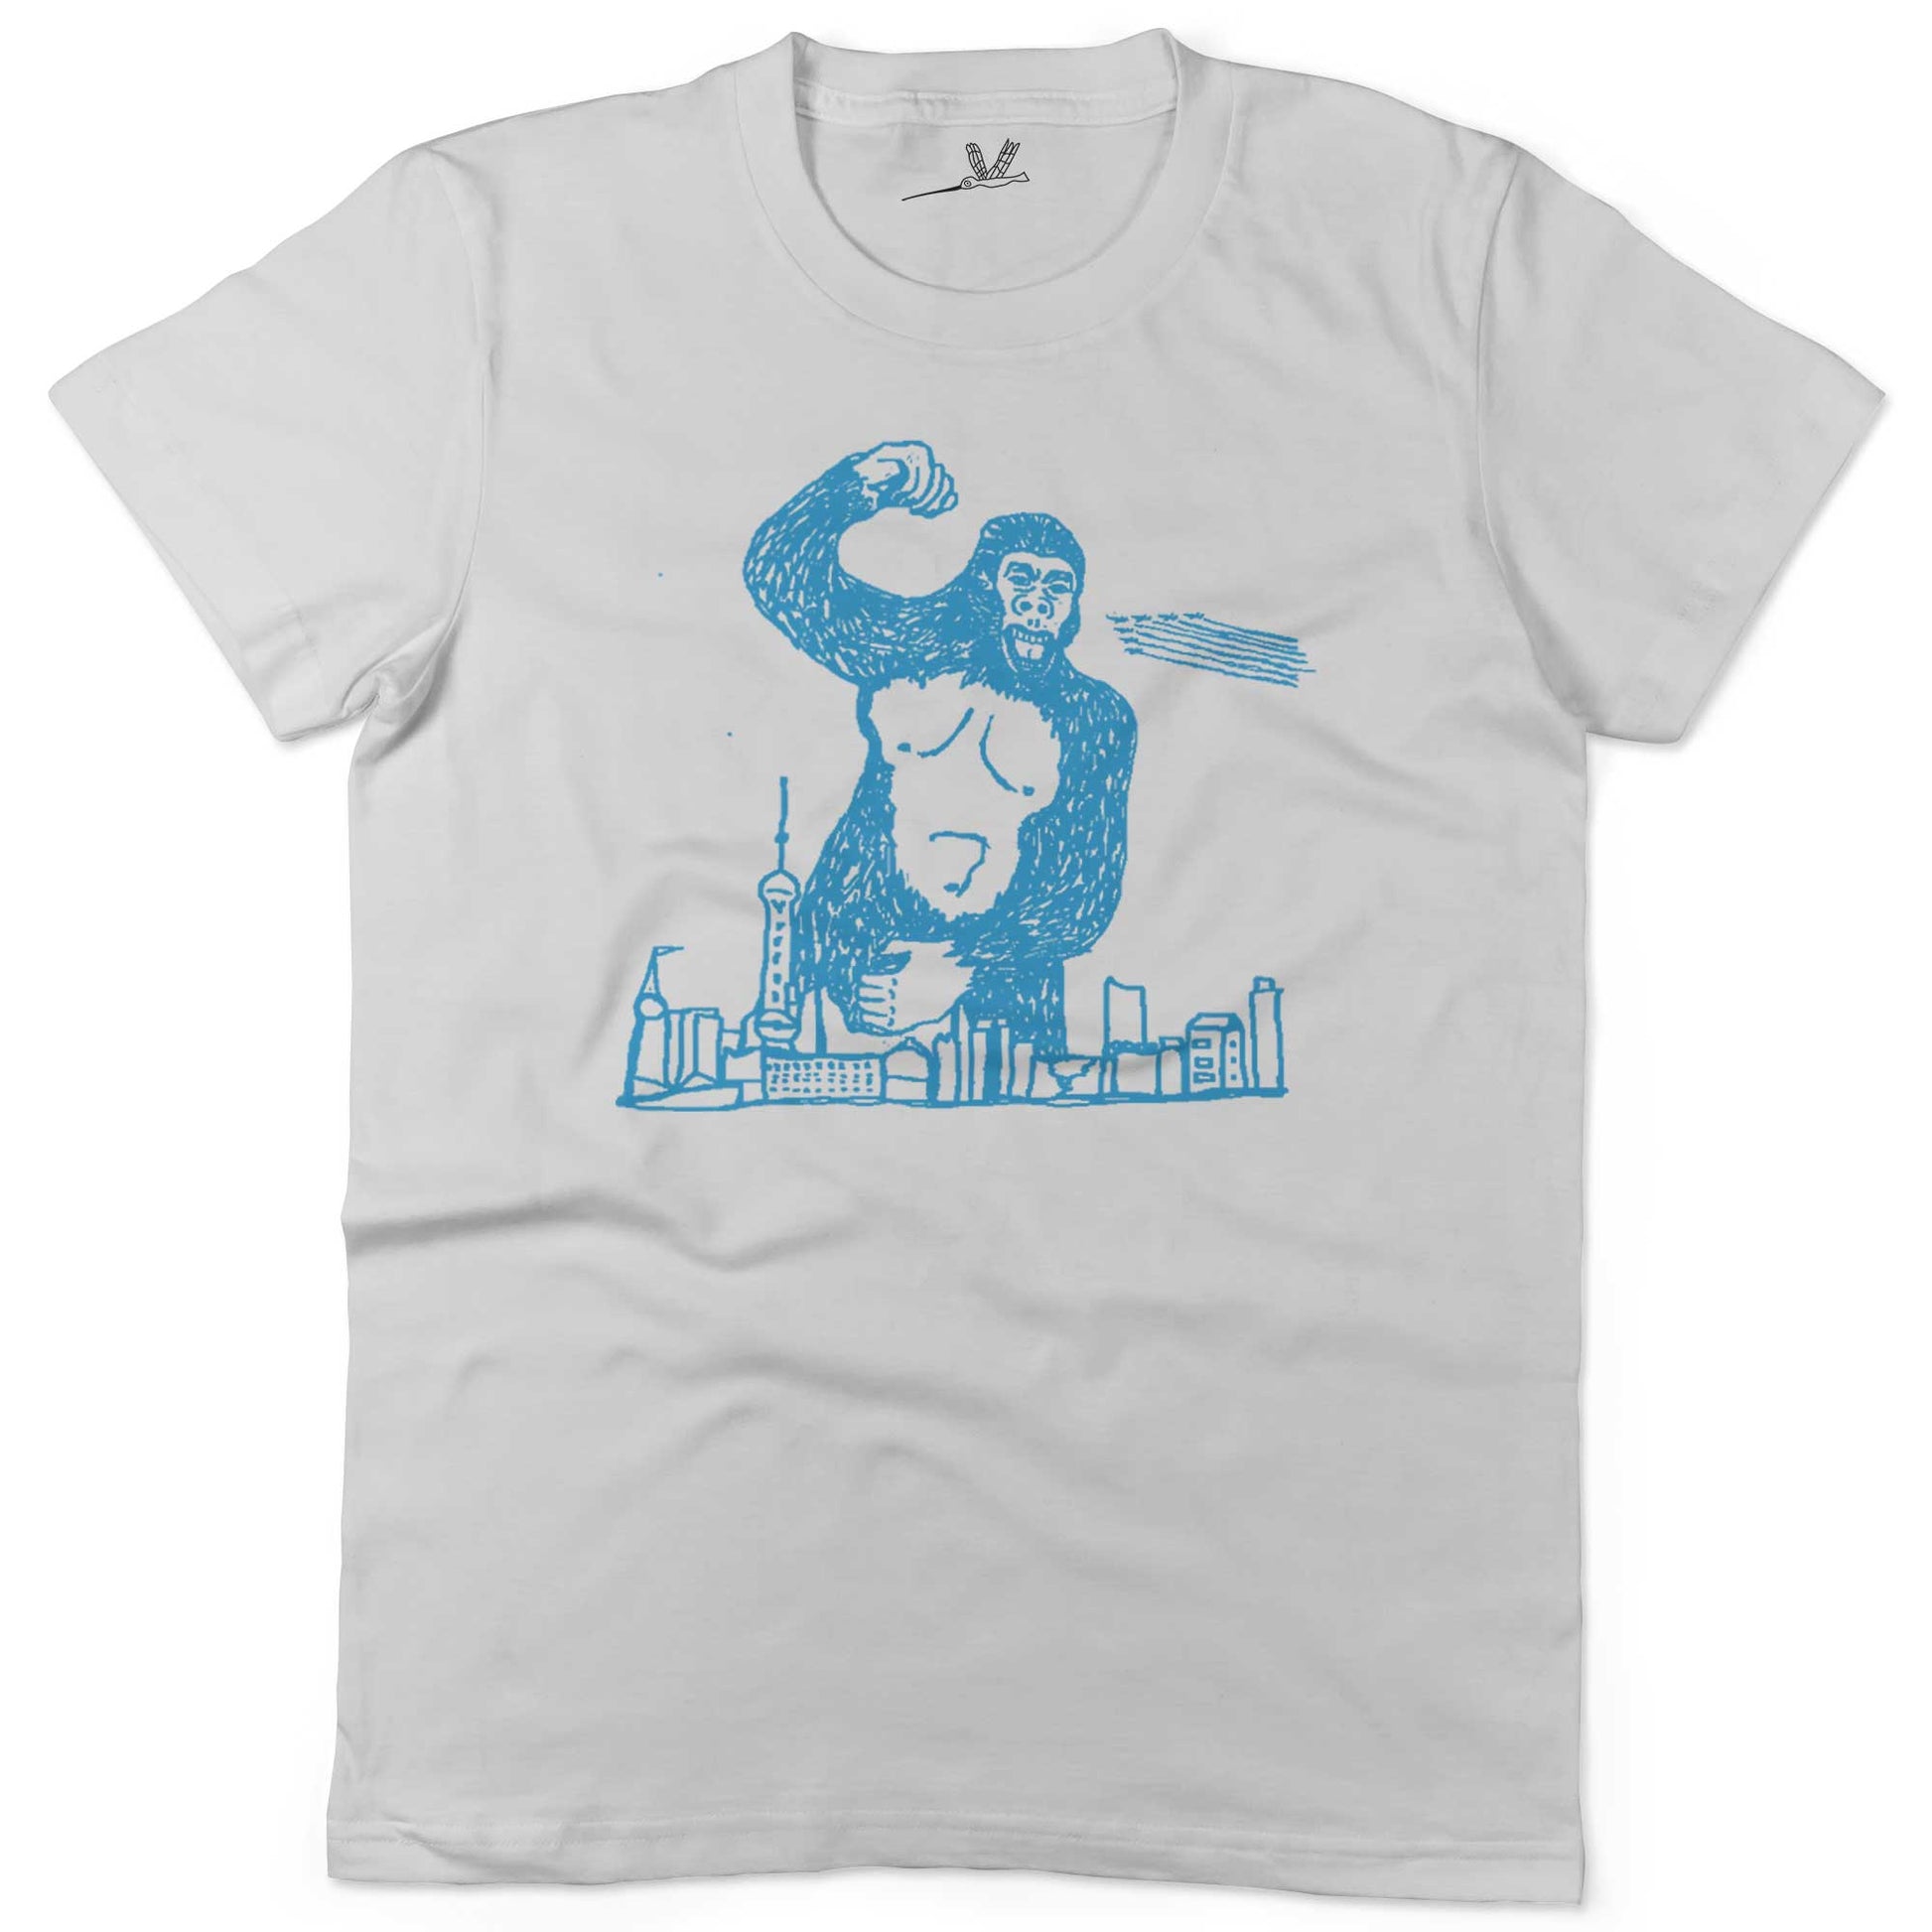 Giant Gorilla Drawing Unisex Or Women's Cotton T-shirt-White-Woman